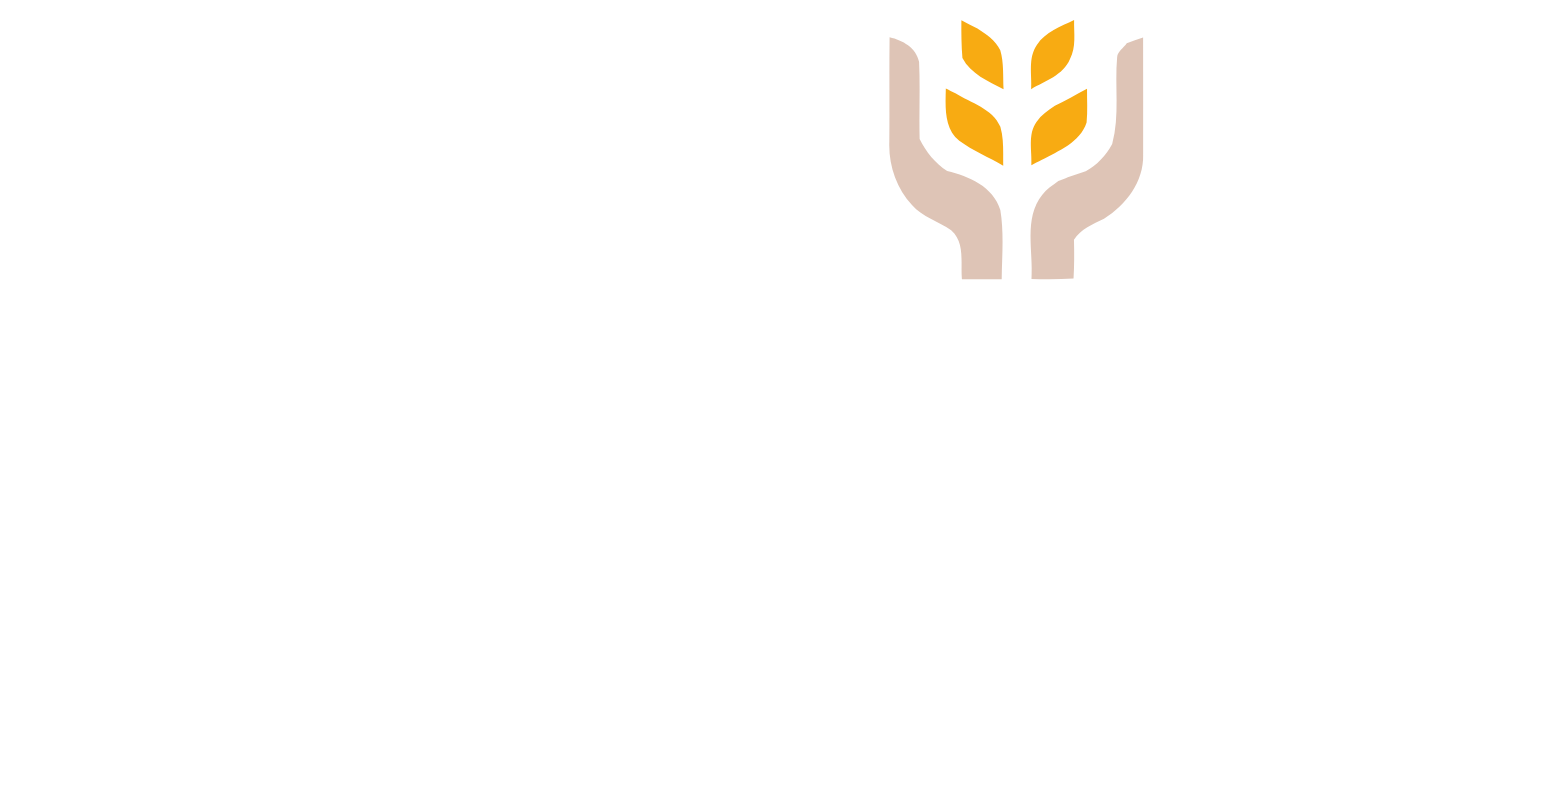 Ghitha logo large for dark backgrounds (transparent PNG)